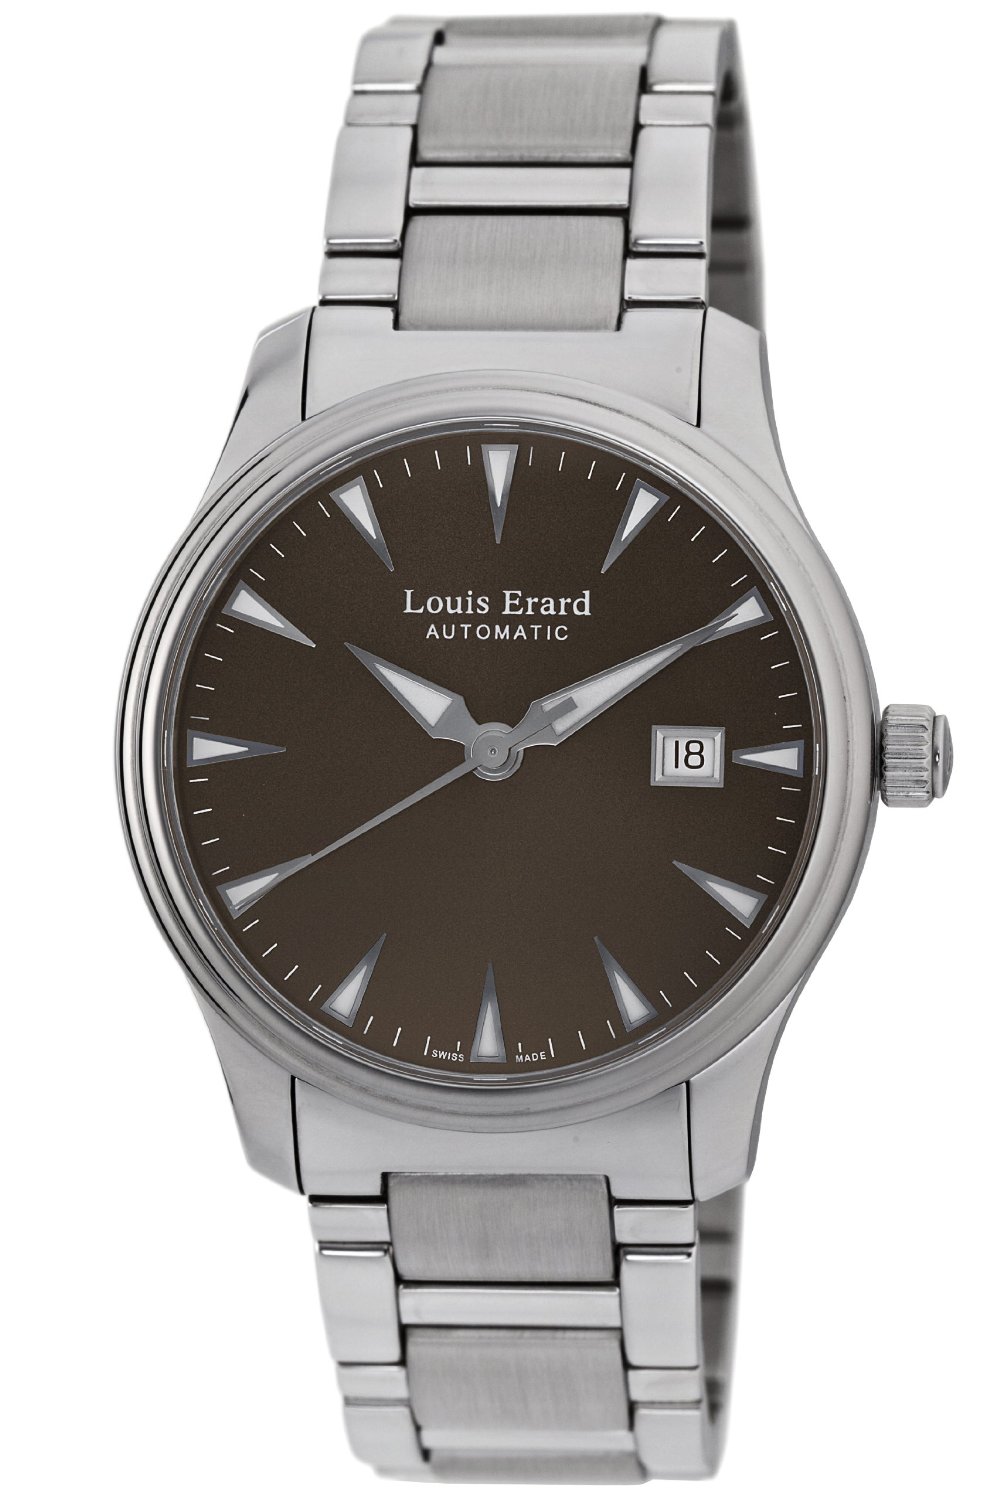 Louis Erard Heritage Mens Automatic Watch 69101se02.bma19 In Black